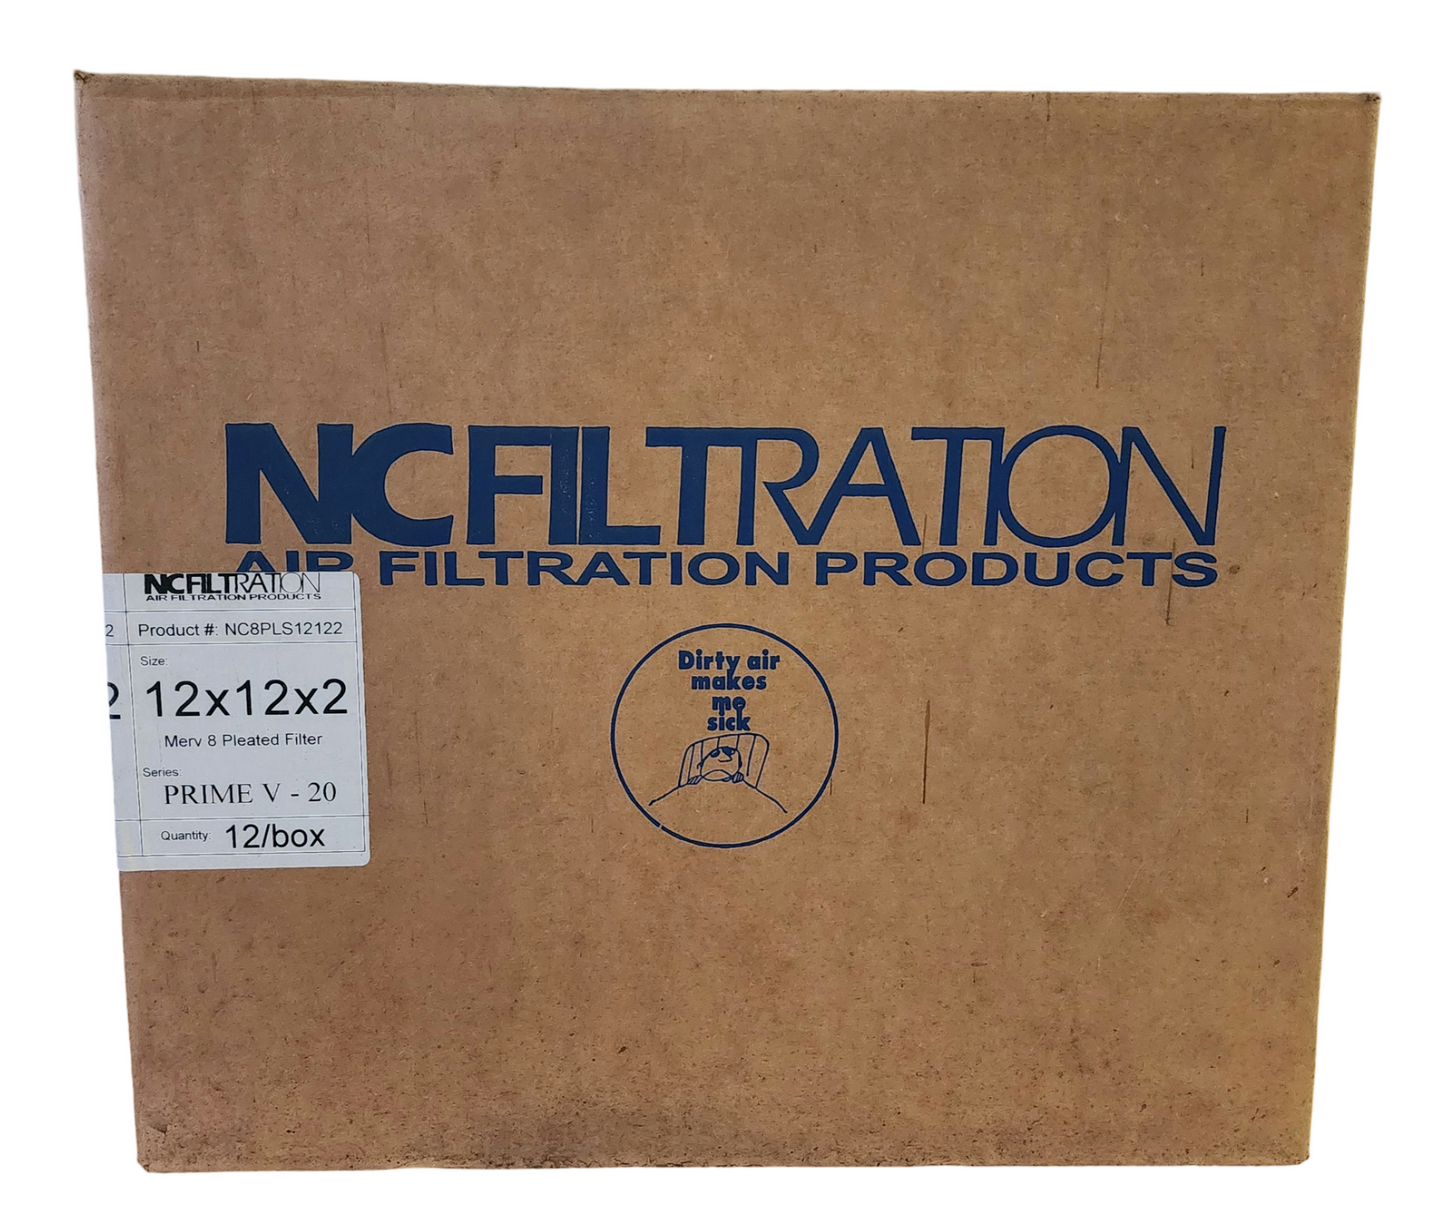 NCFiltration 12x12x2 MERV 8 Pleated Filter - 12/Box - Prime V-20 - Moisture Resistant